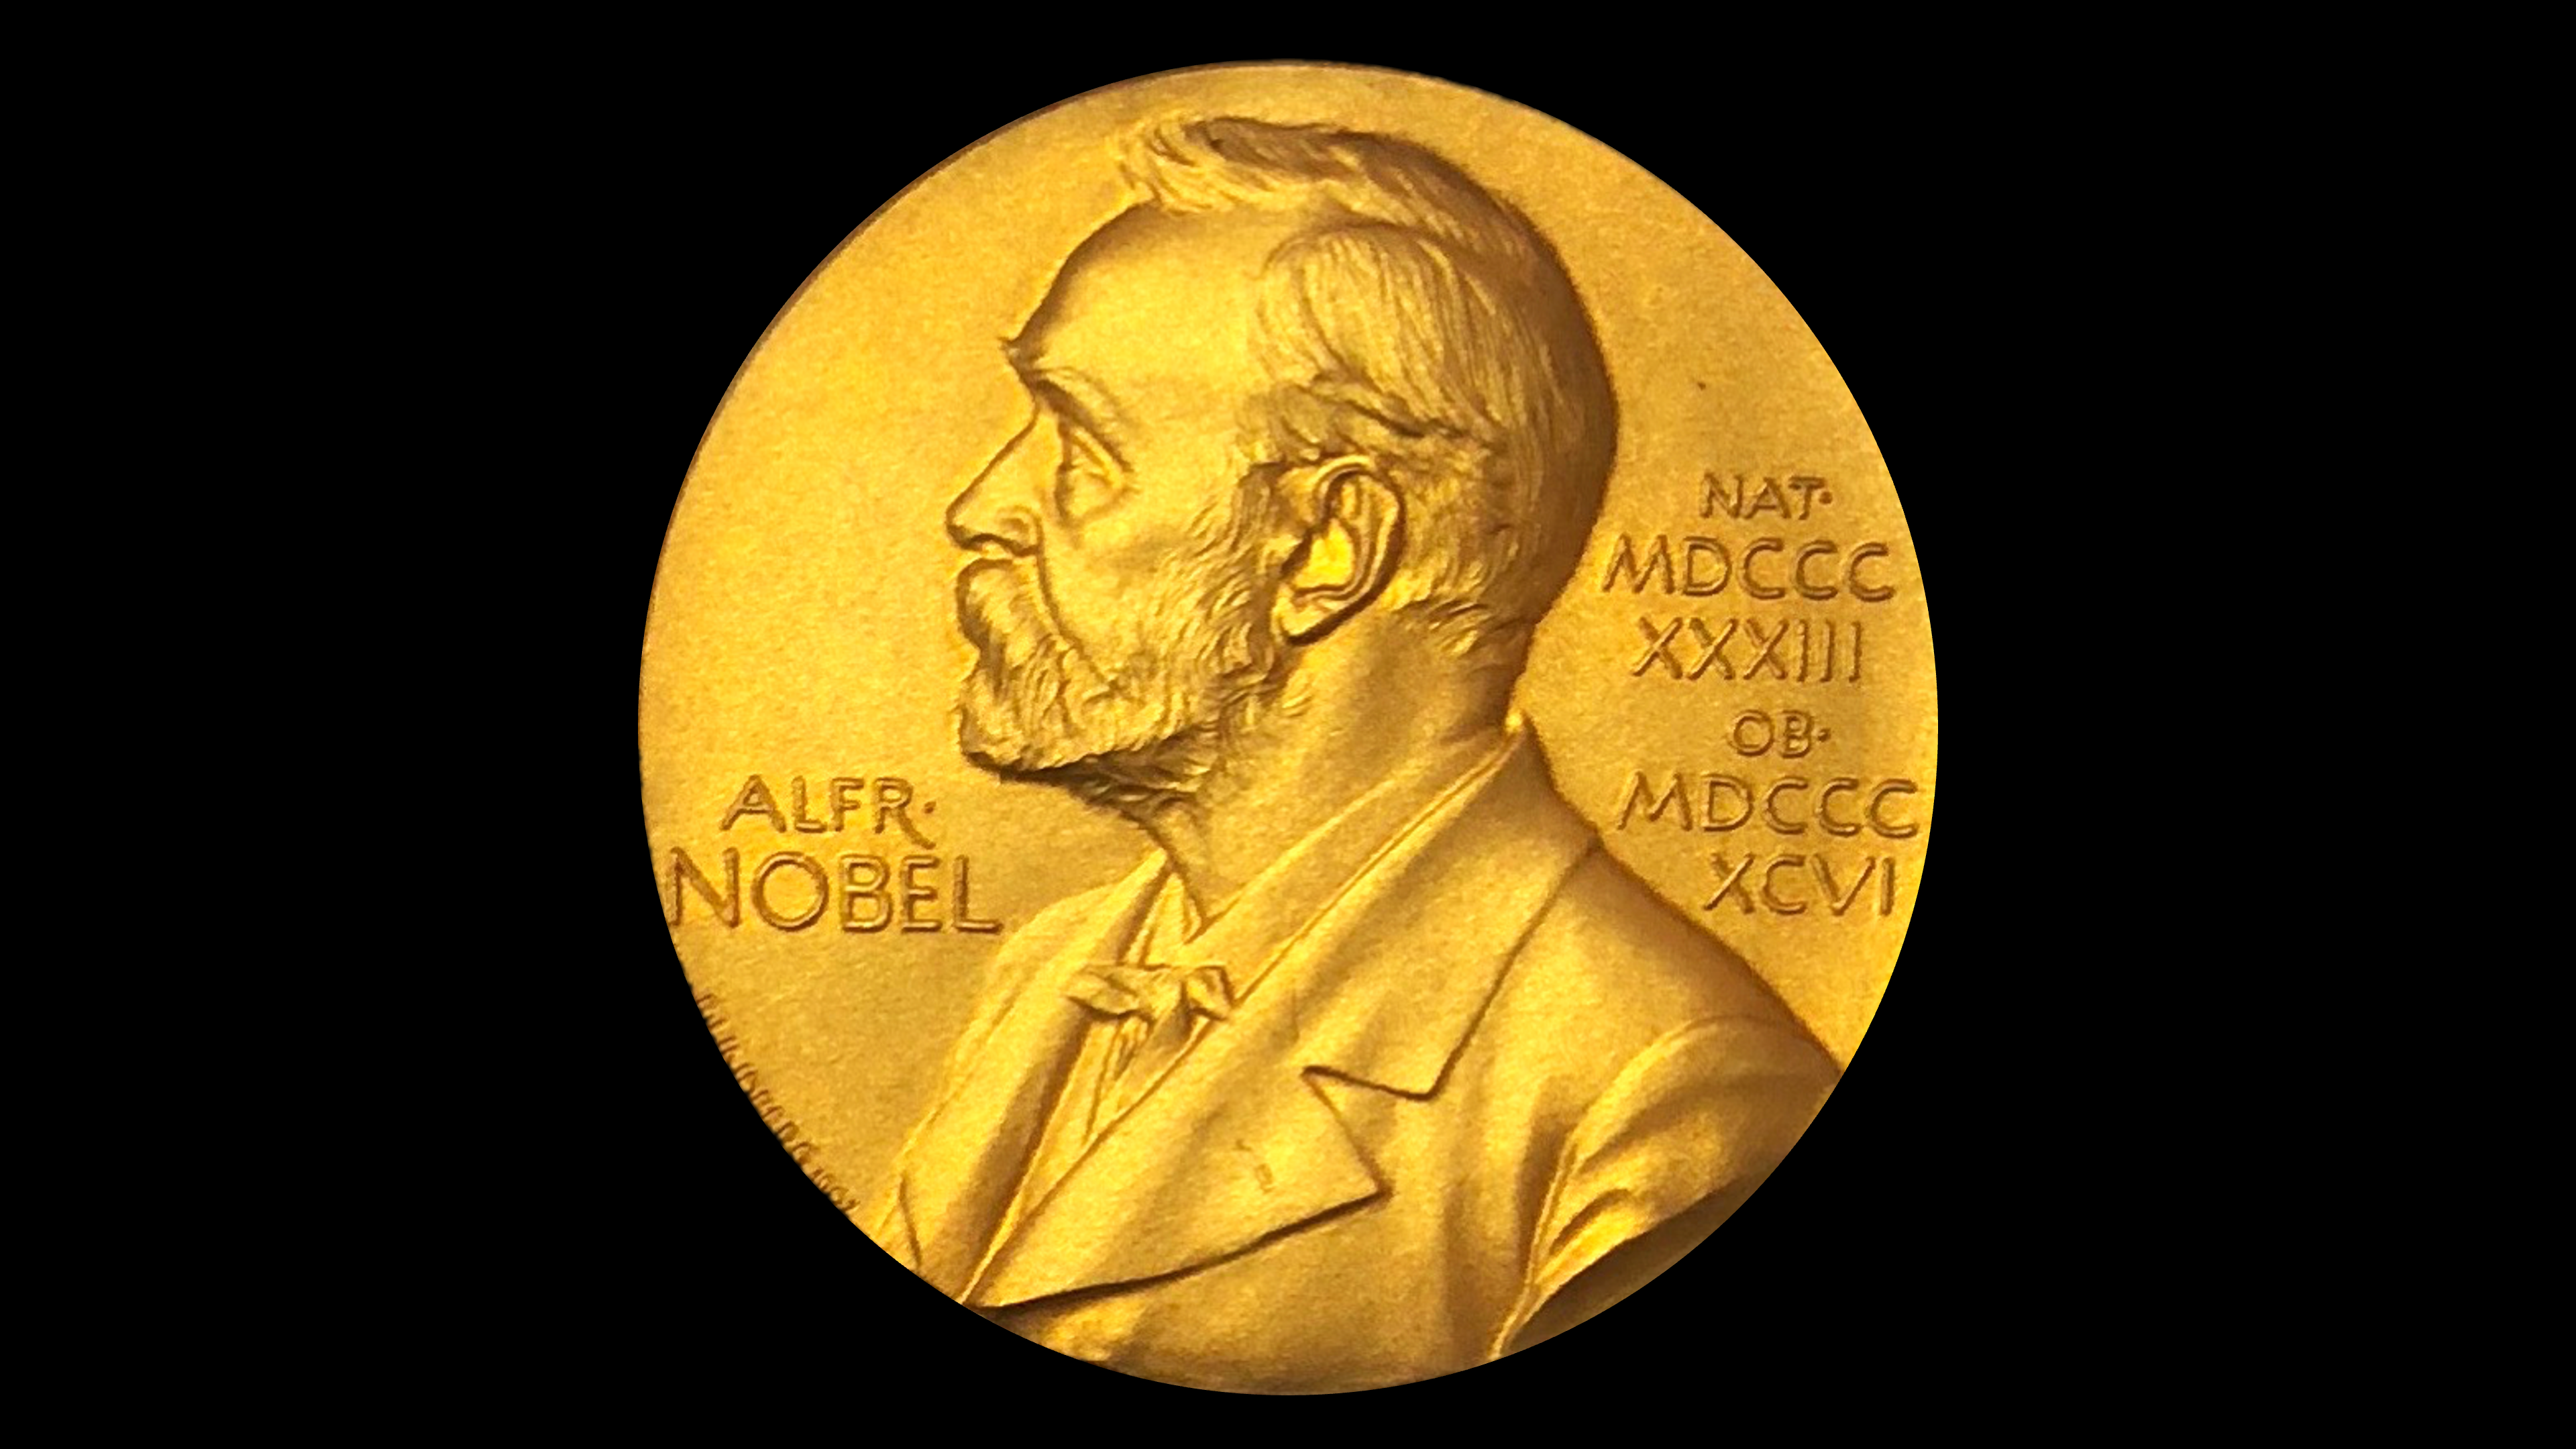 A circular, gold Nobel Prize Medal sits against a black background.